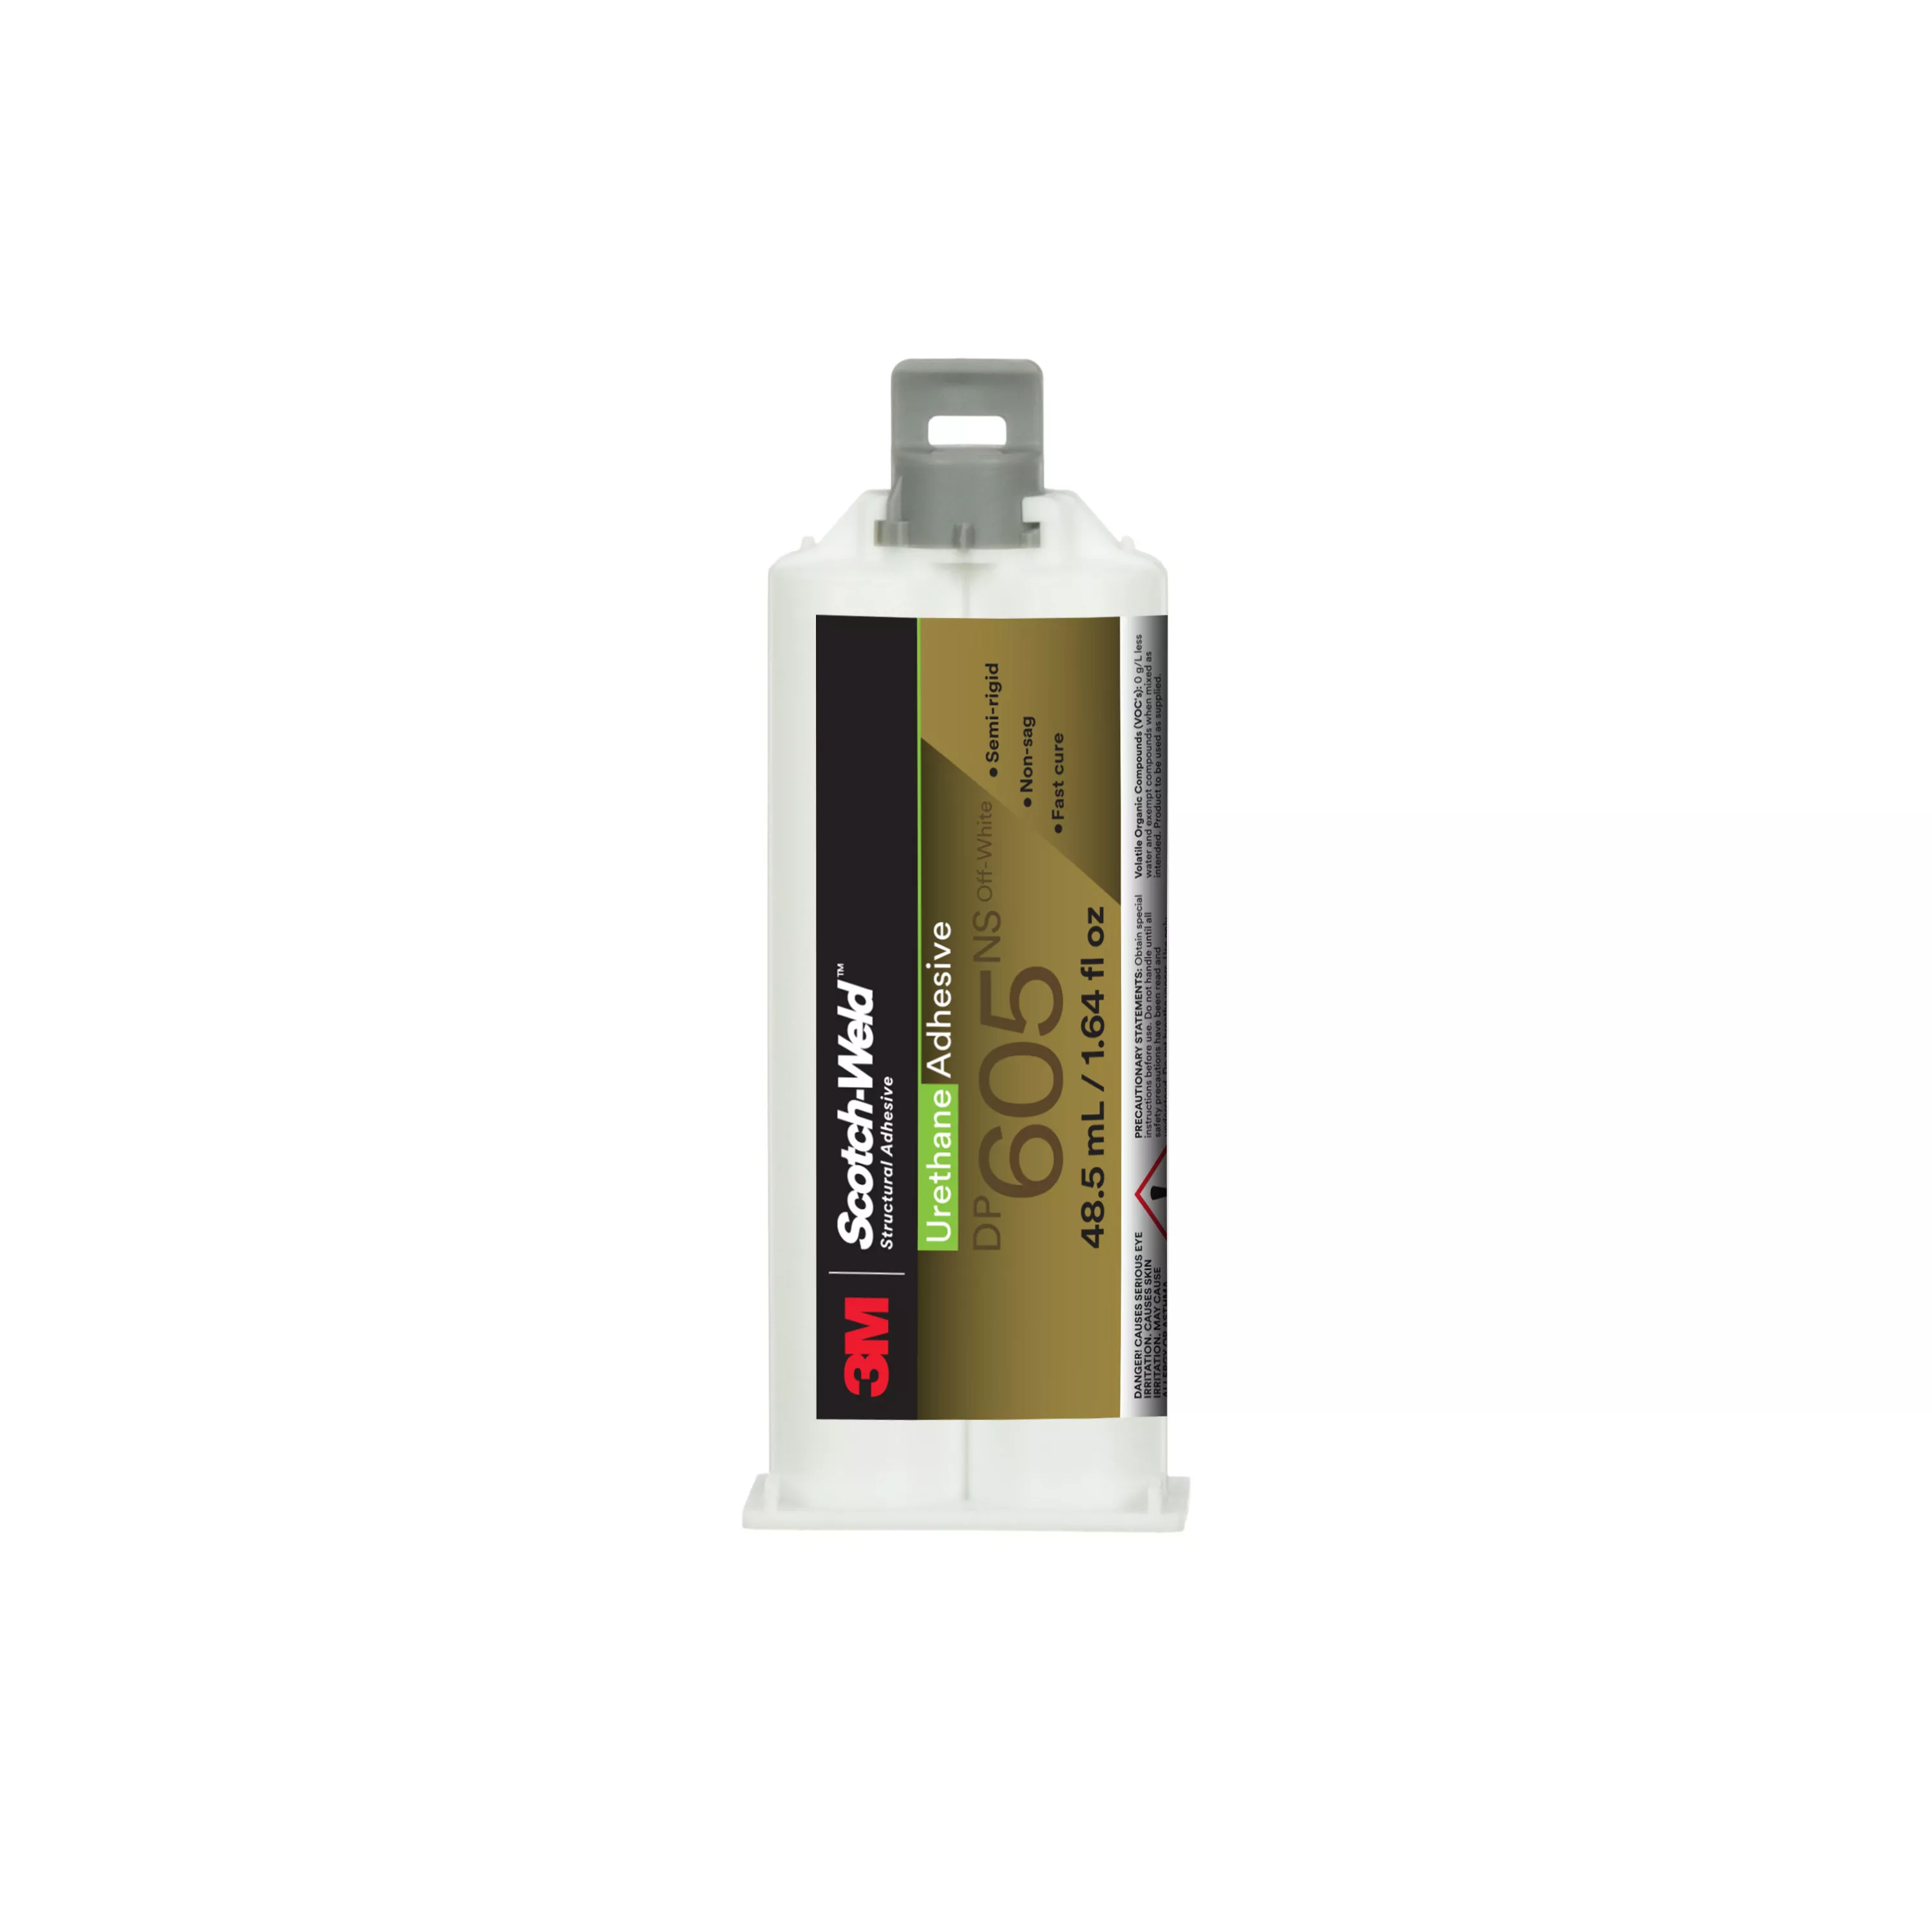 3M™ Scotch-Weld™ Urethane Adhesive DP605NS, Off-White, 48.5 mL Duo-Pak,
12/Case